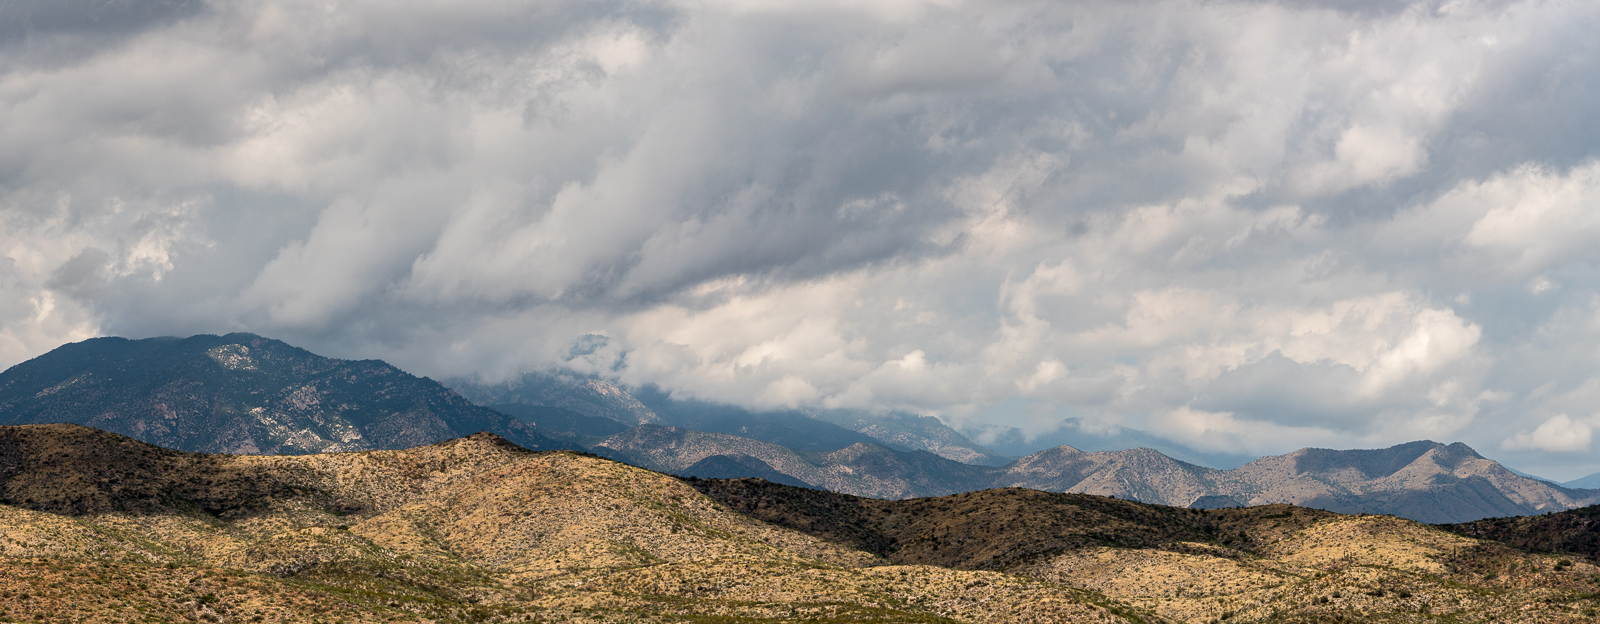 A storm over the Santa Catalina Mountains - A-7 Ranch between Redington Road and the San Pedro River.